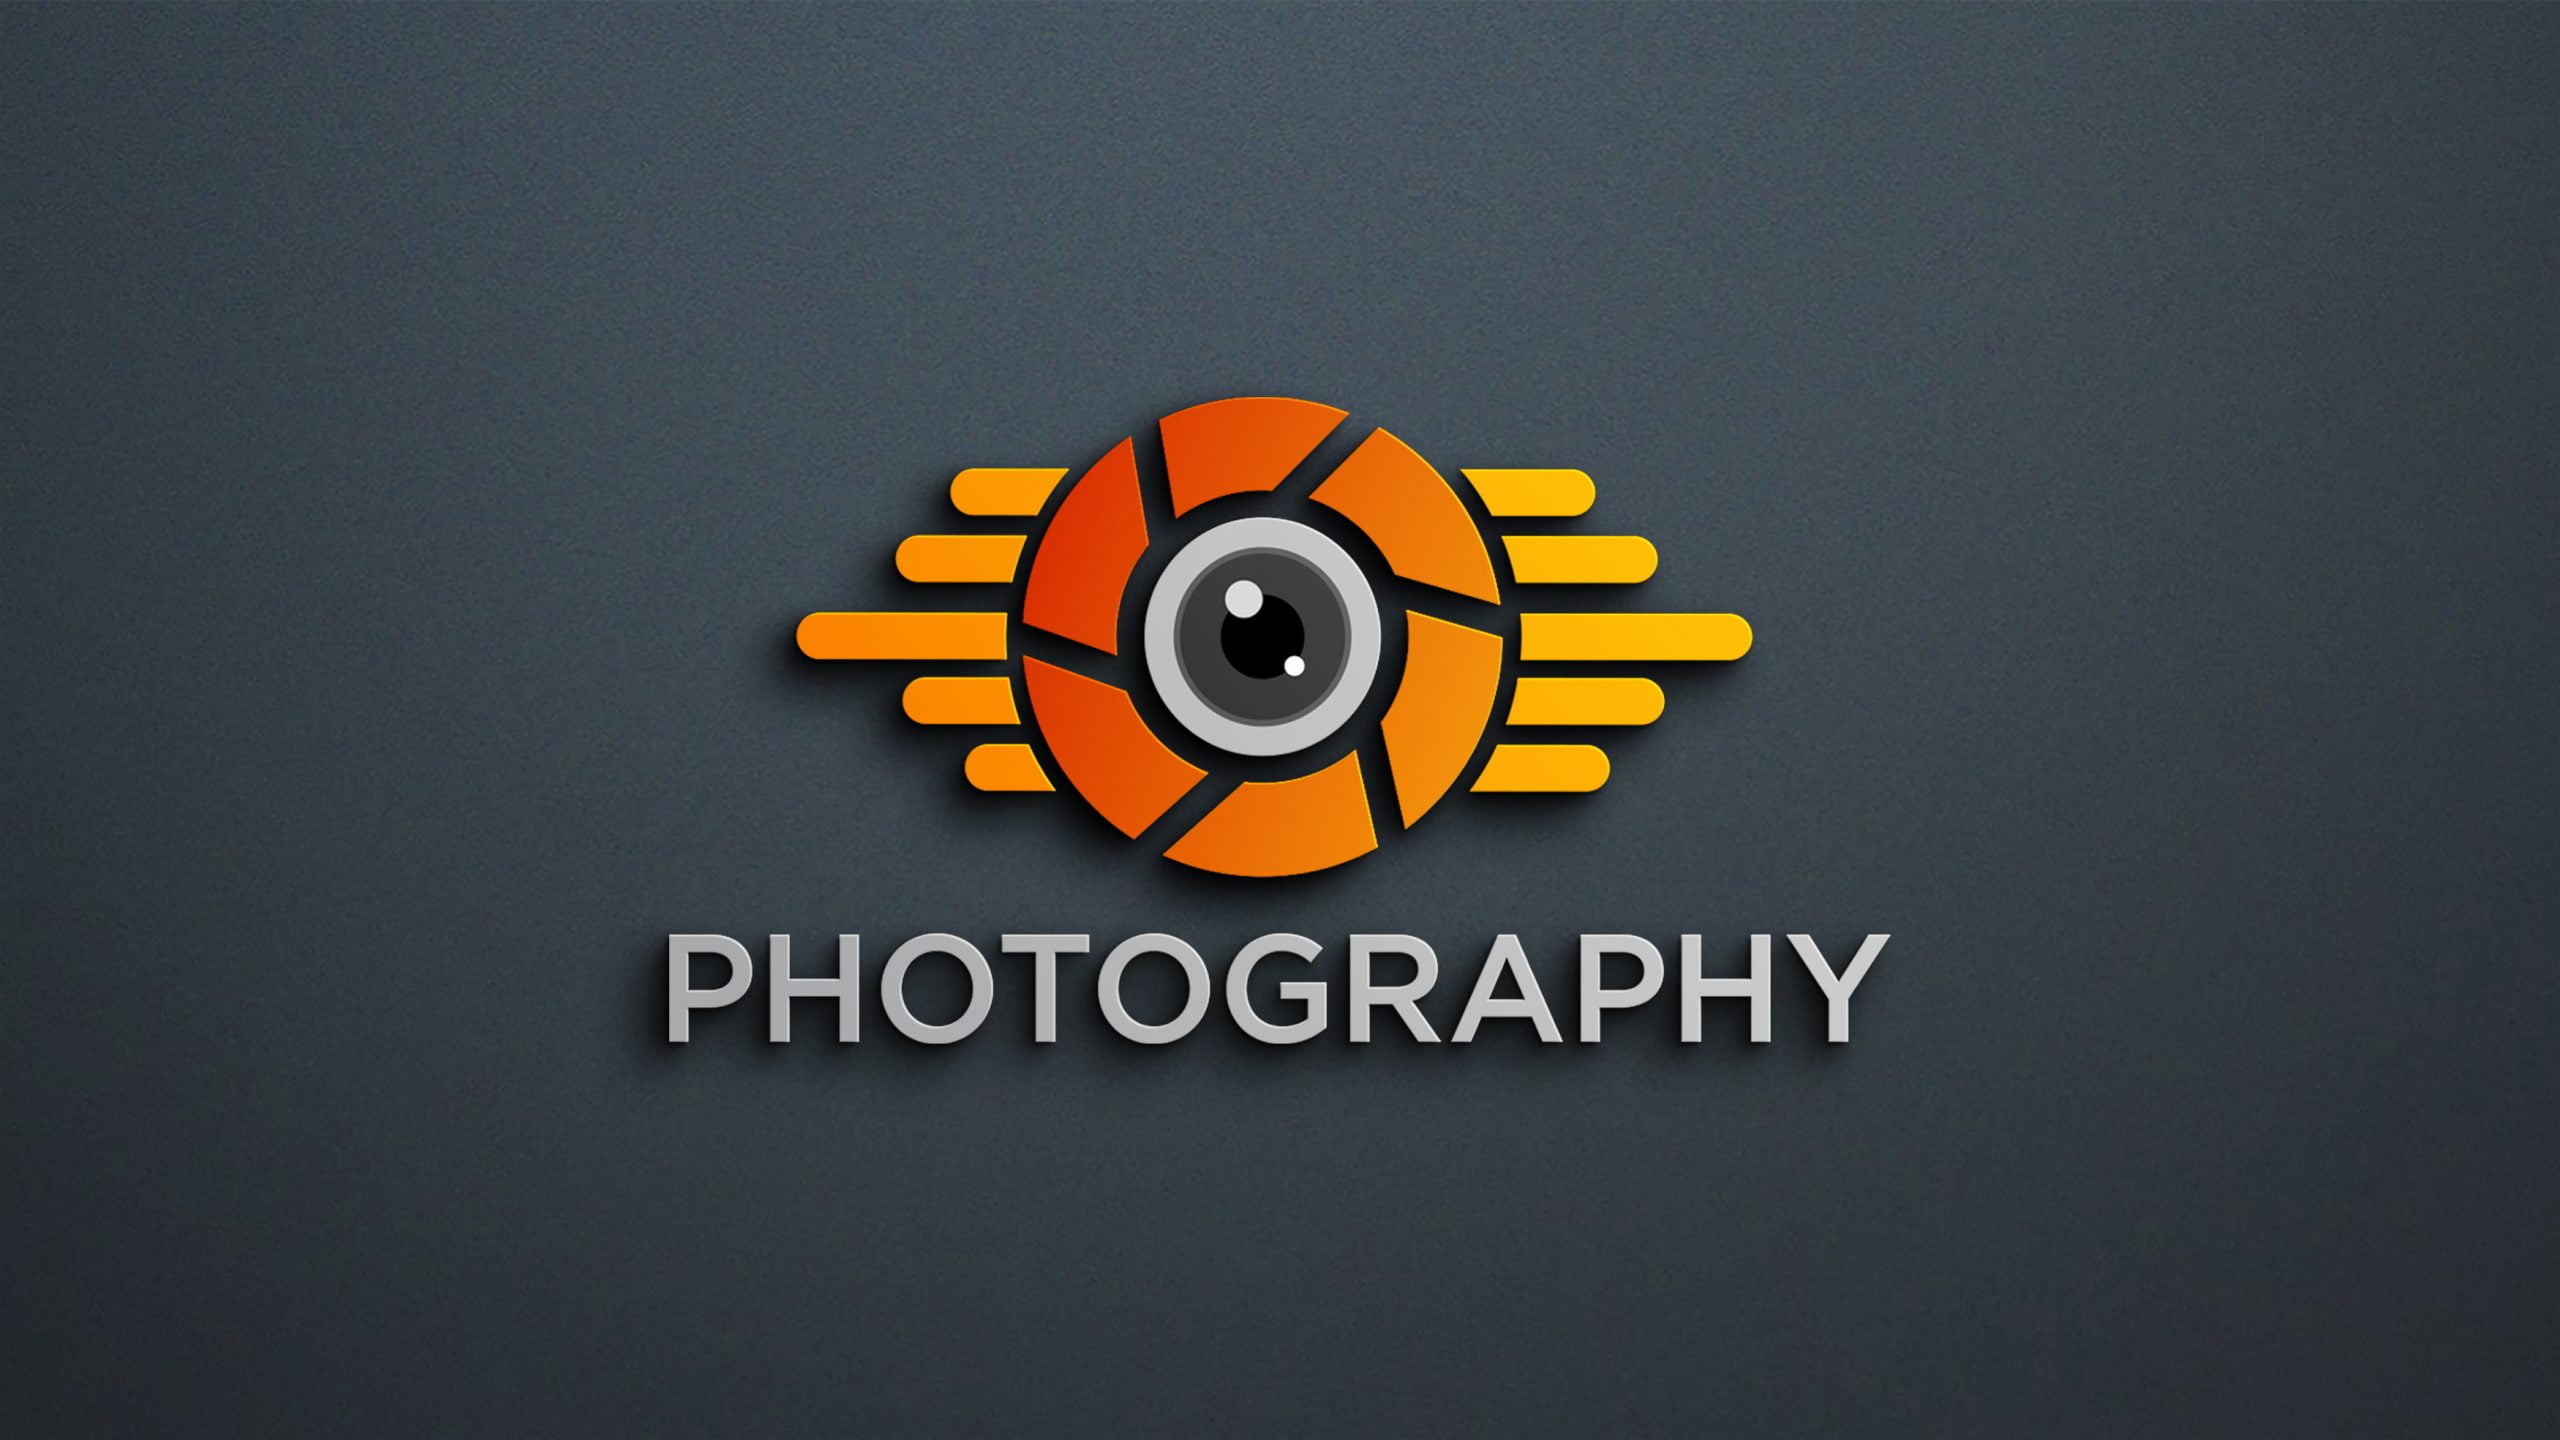 photography logo psd file